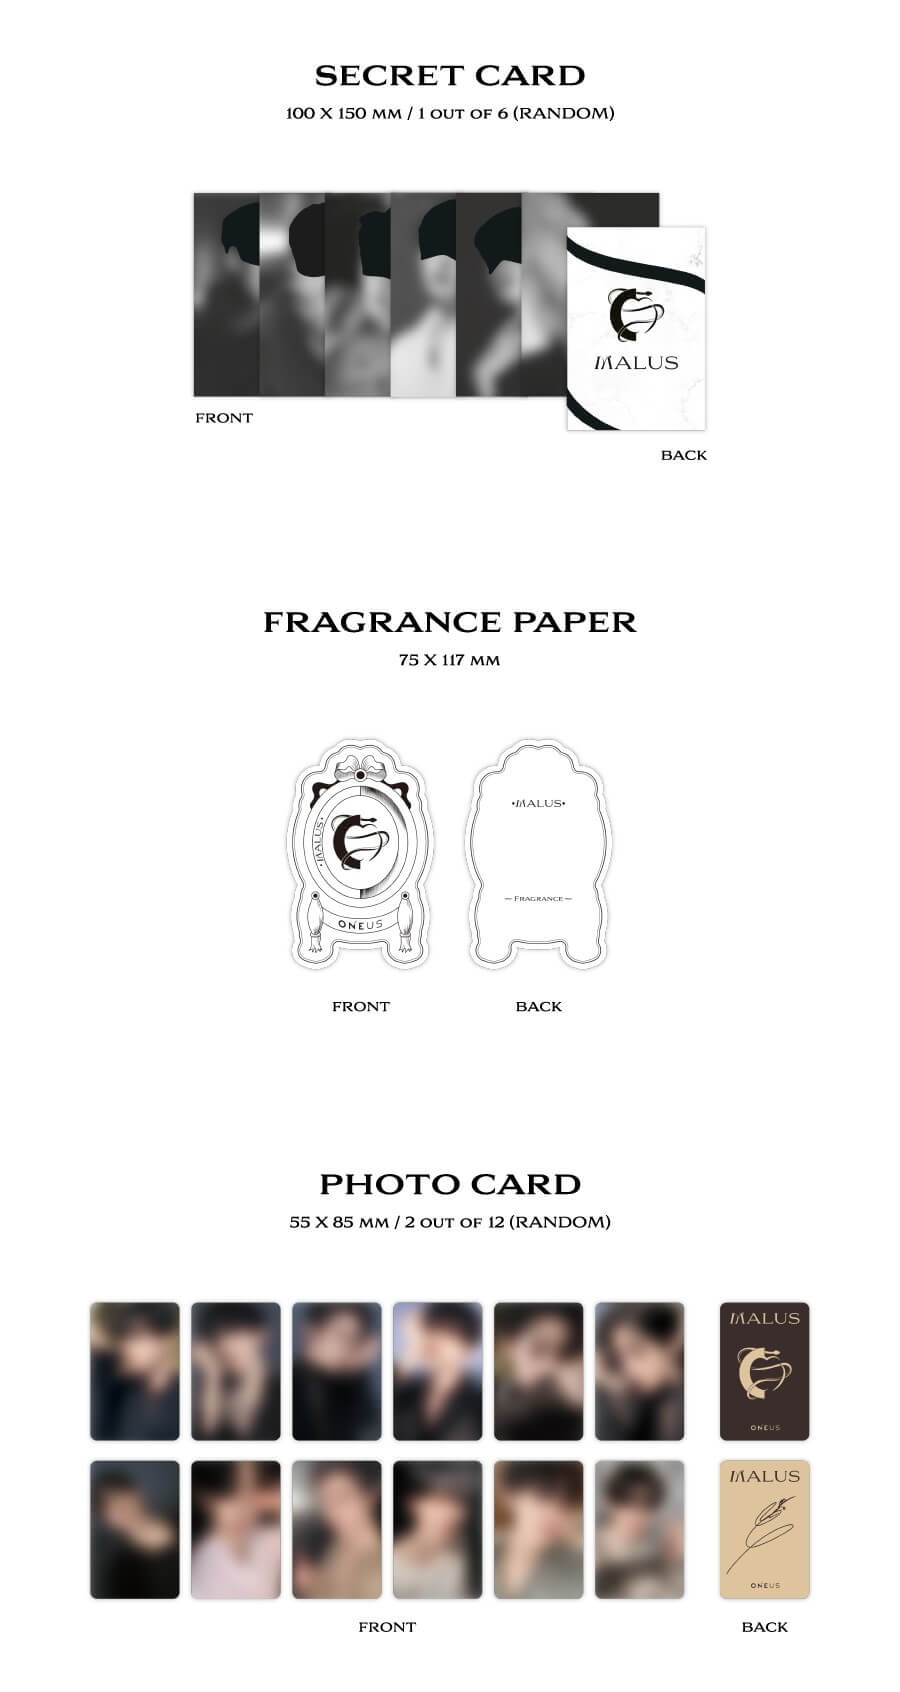 ONEUS MALUS MAIN Version Inclusions Secret Card Fragrance Paper Photocards